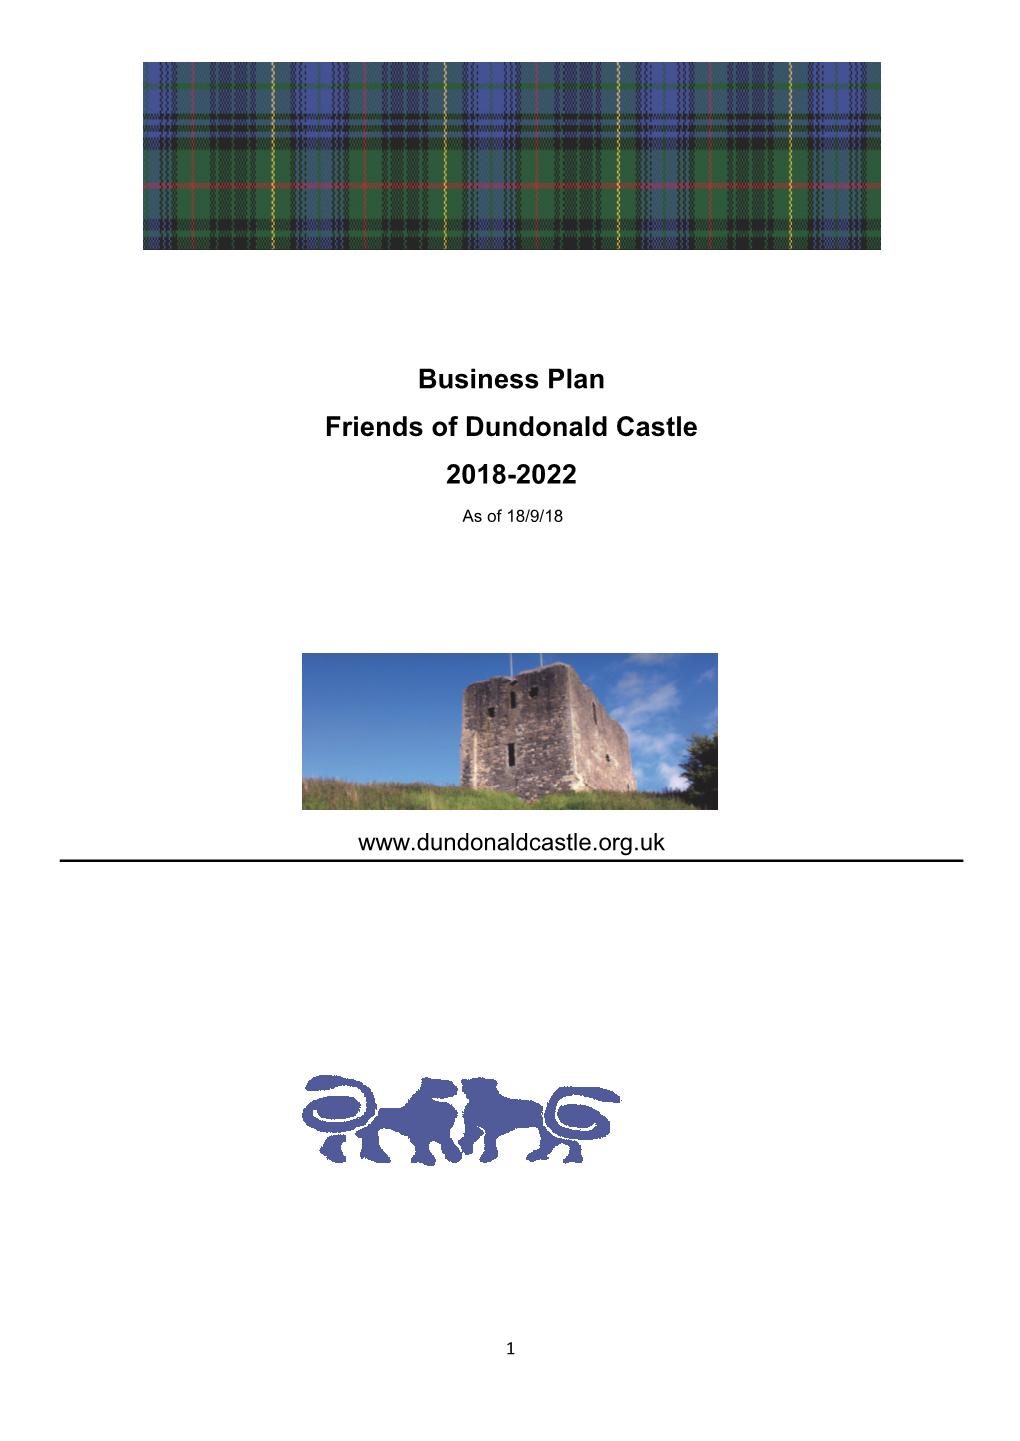 Business Plan Friends of Dundonald Castle 2018-2022